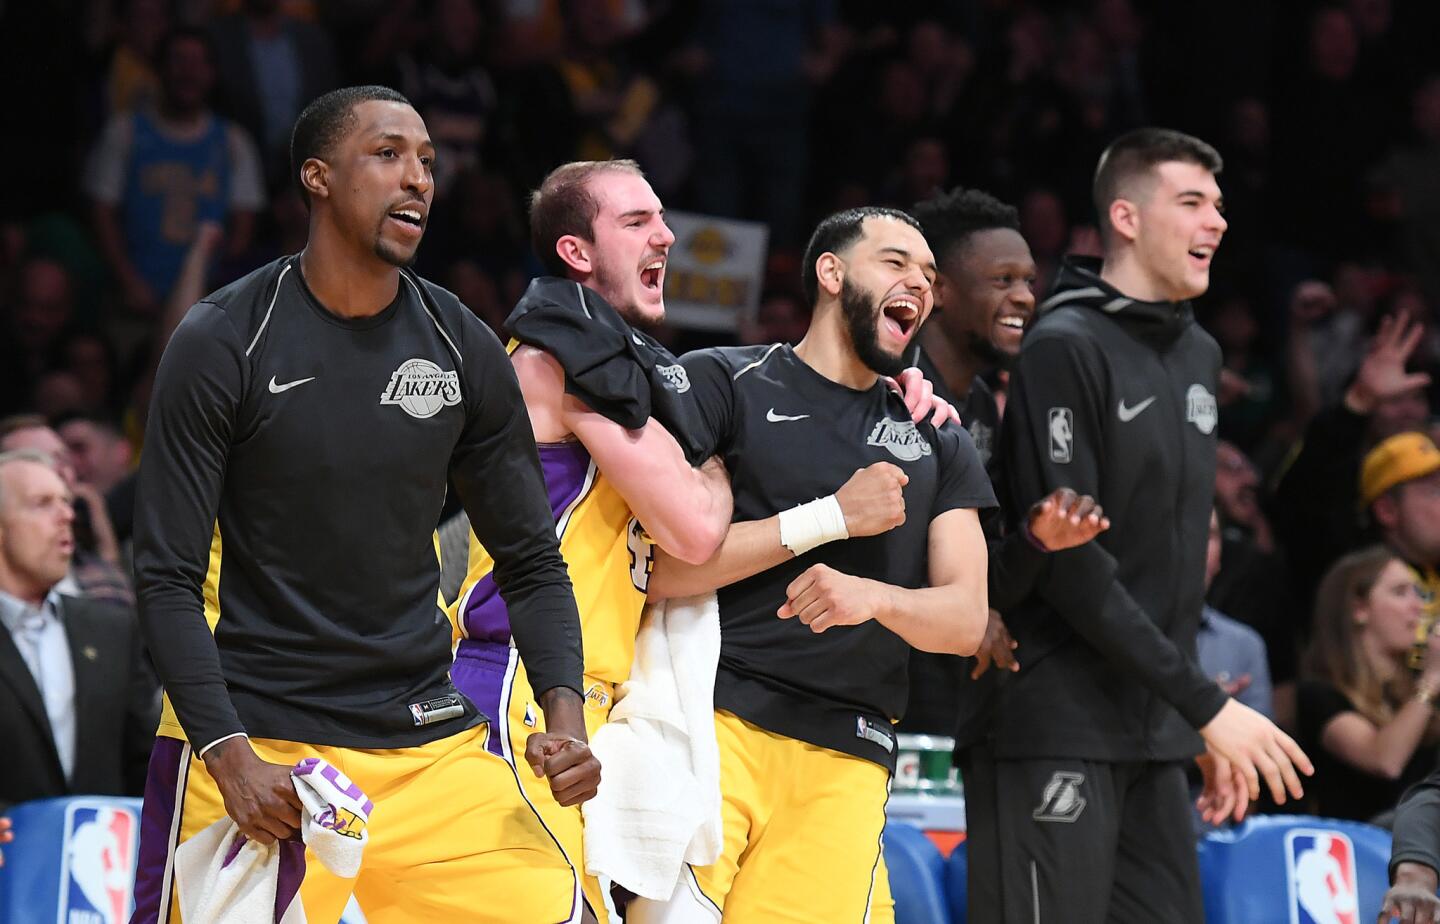 Lakers celebrate